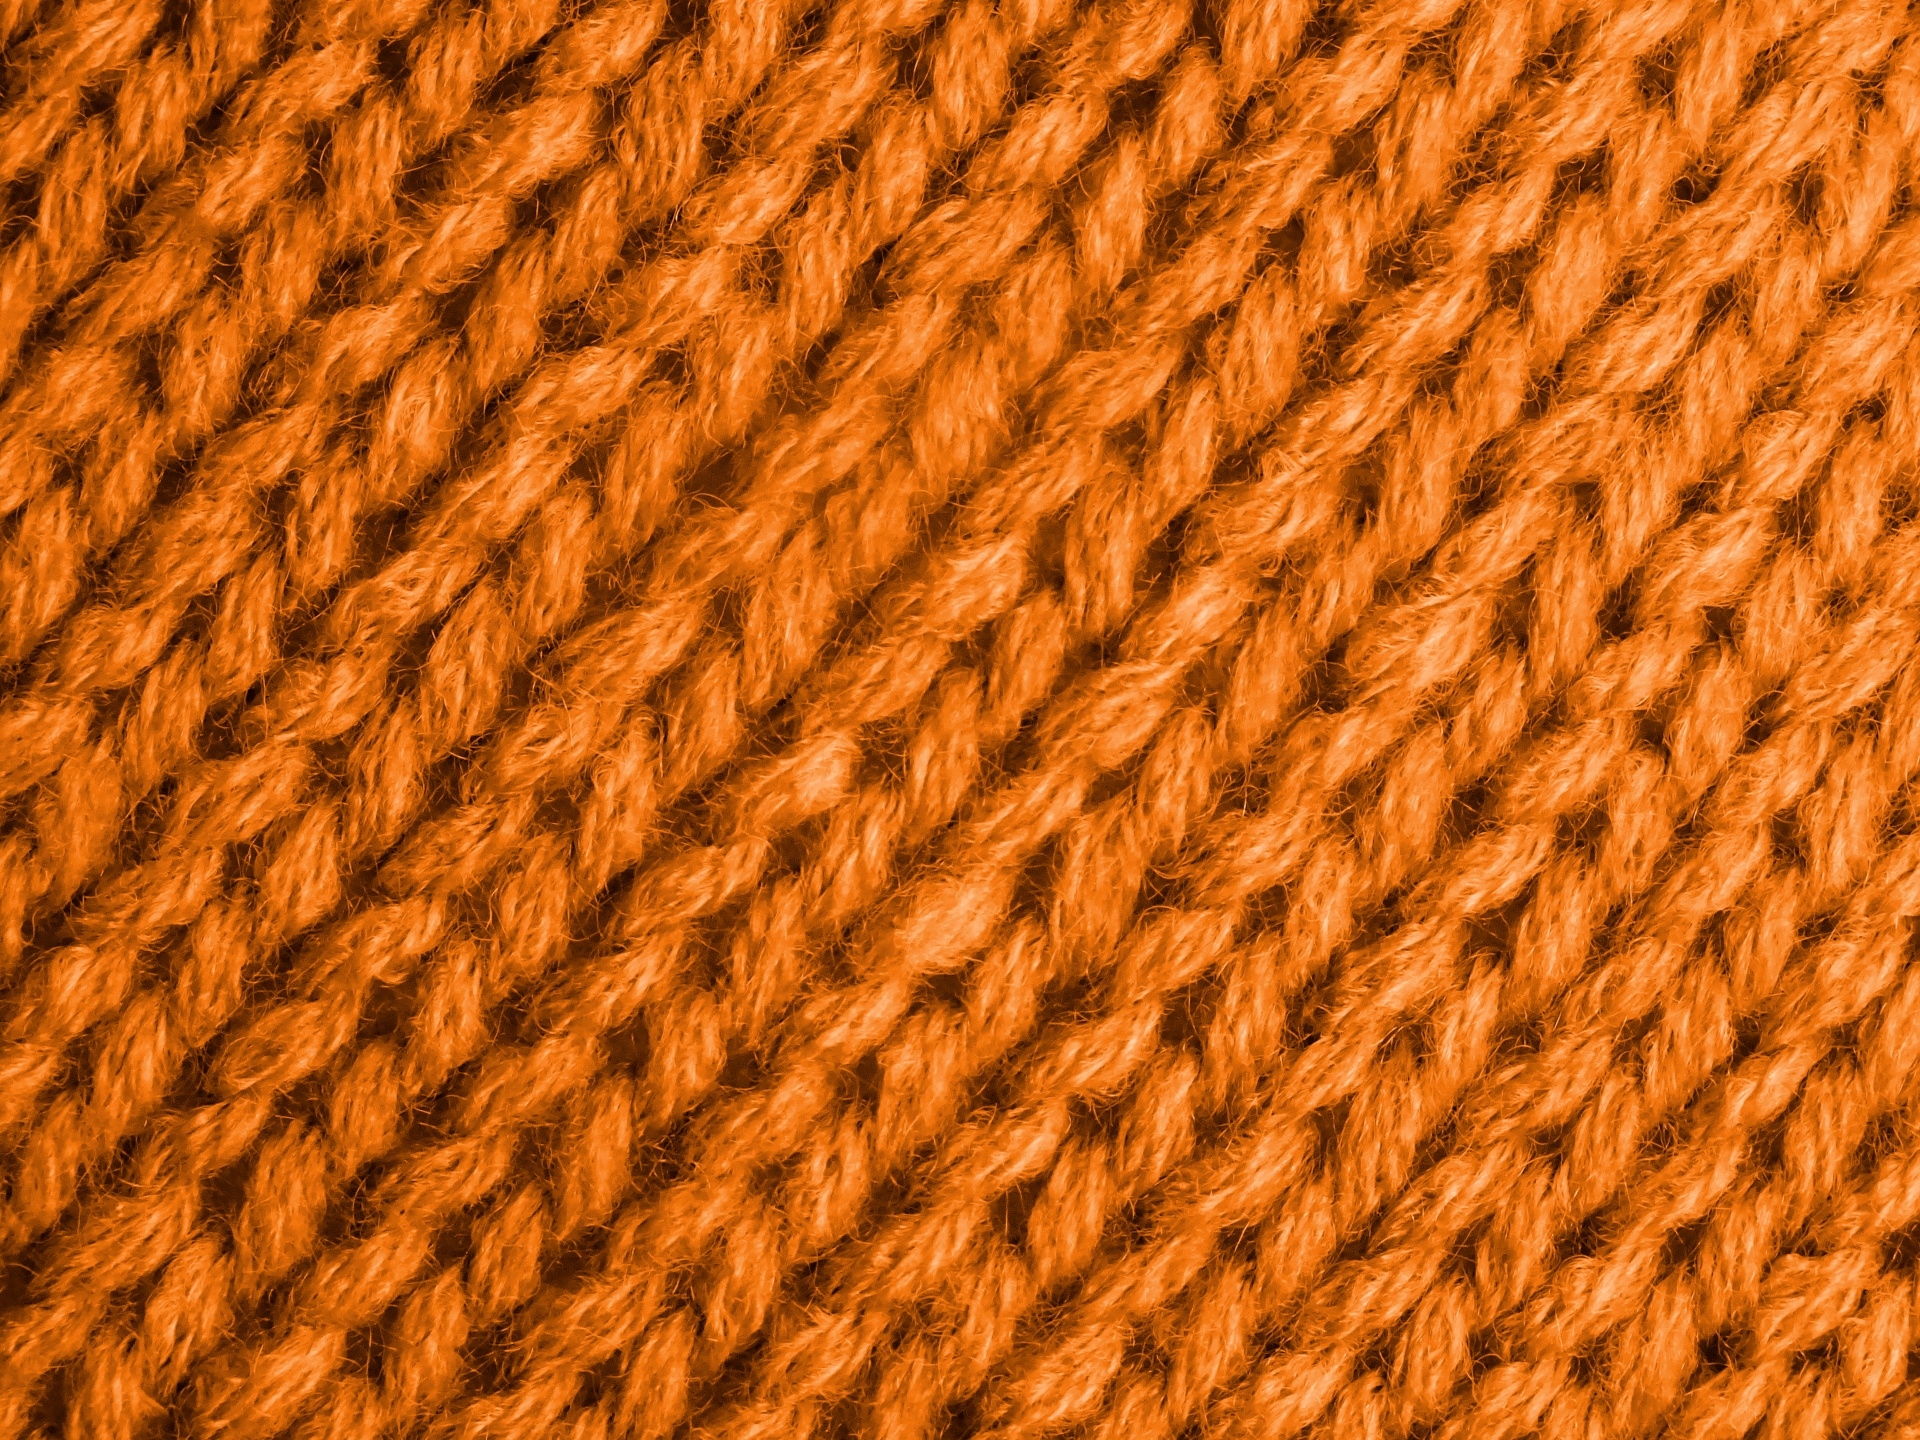 Orange Knitted Wool Background